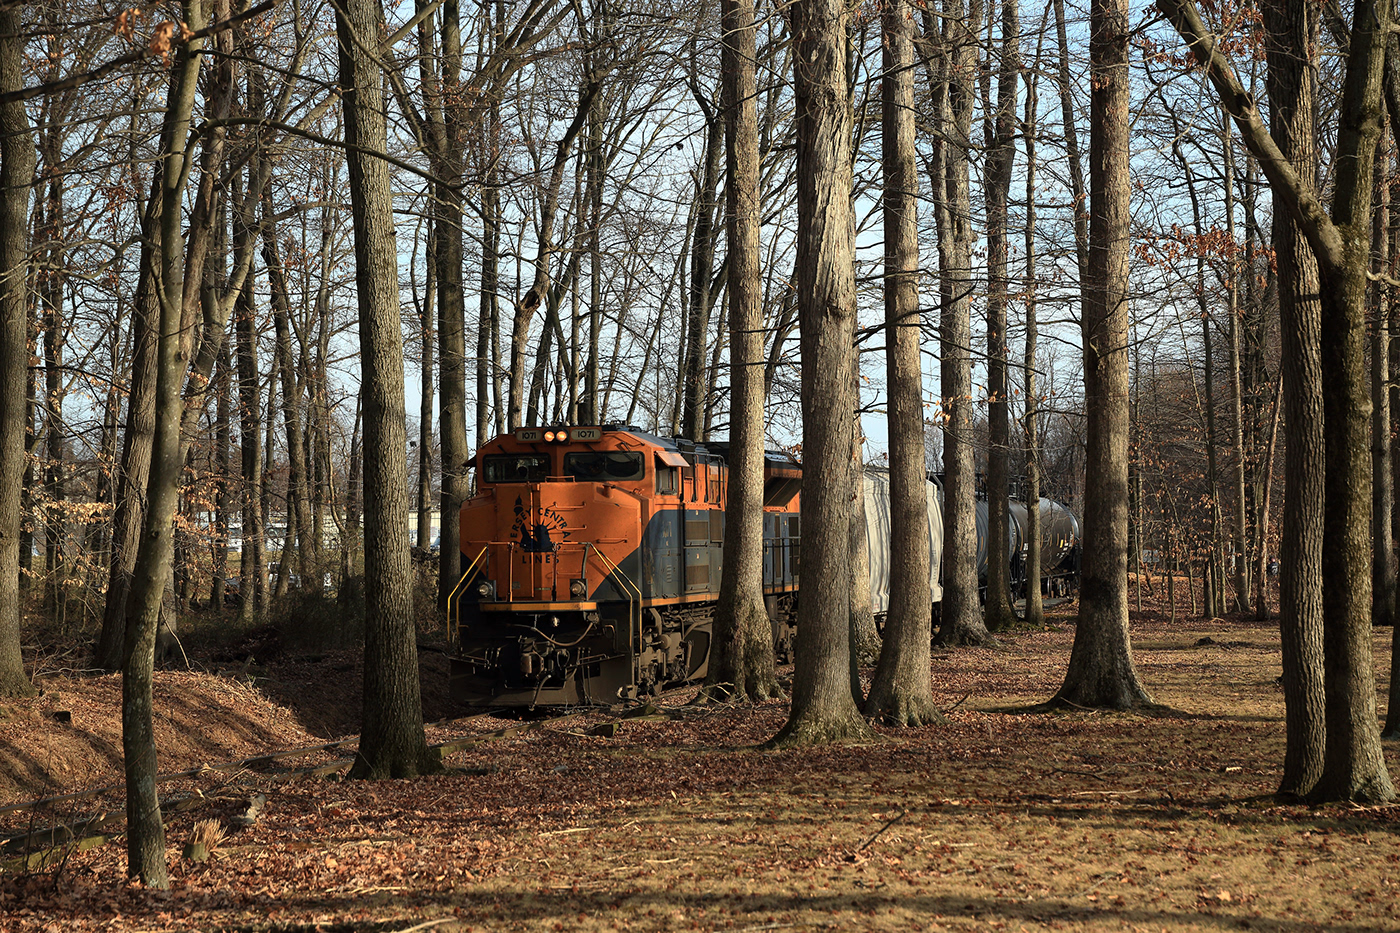 new jersey maryland railroad trains Trainspotting heritage Norfolk Southern Railroad photography railroad tracks